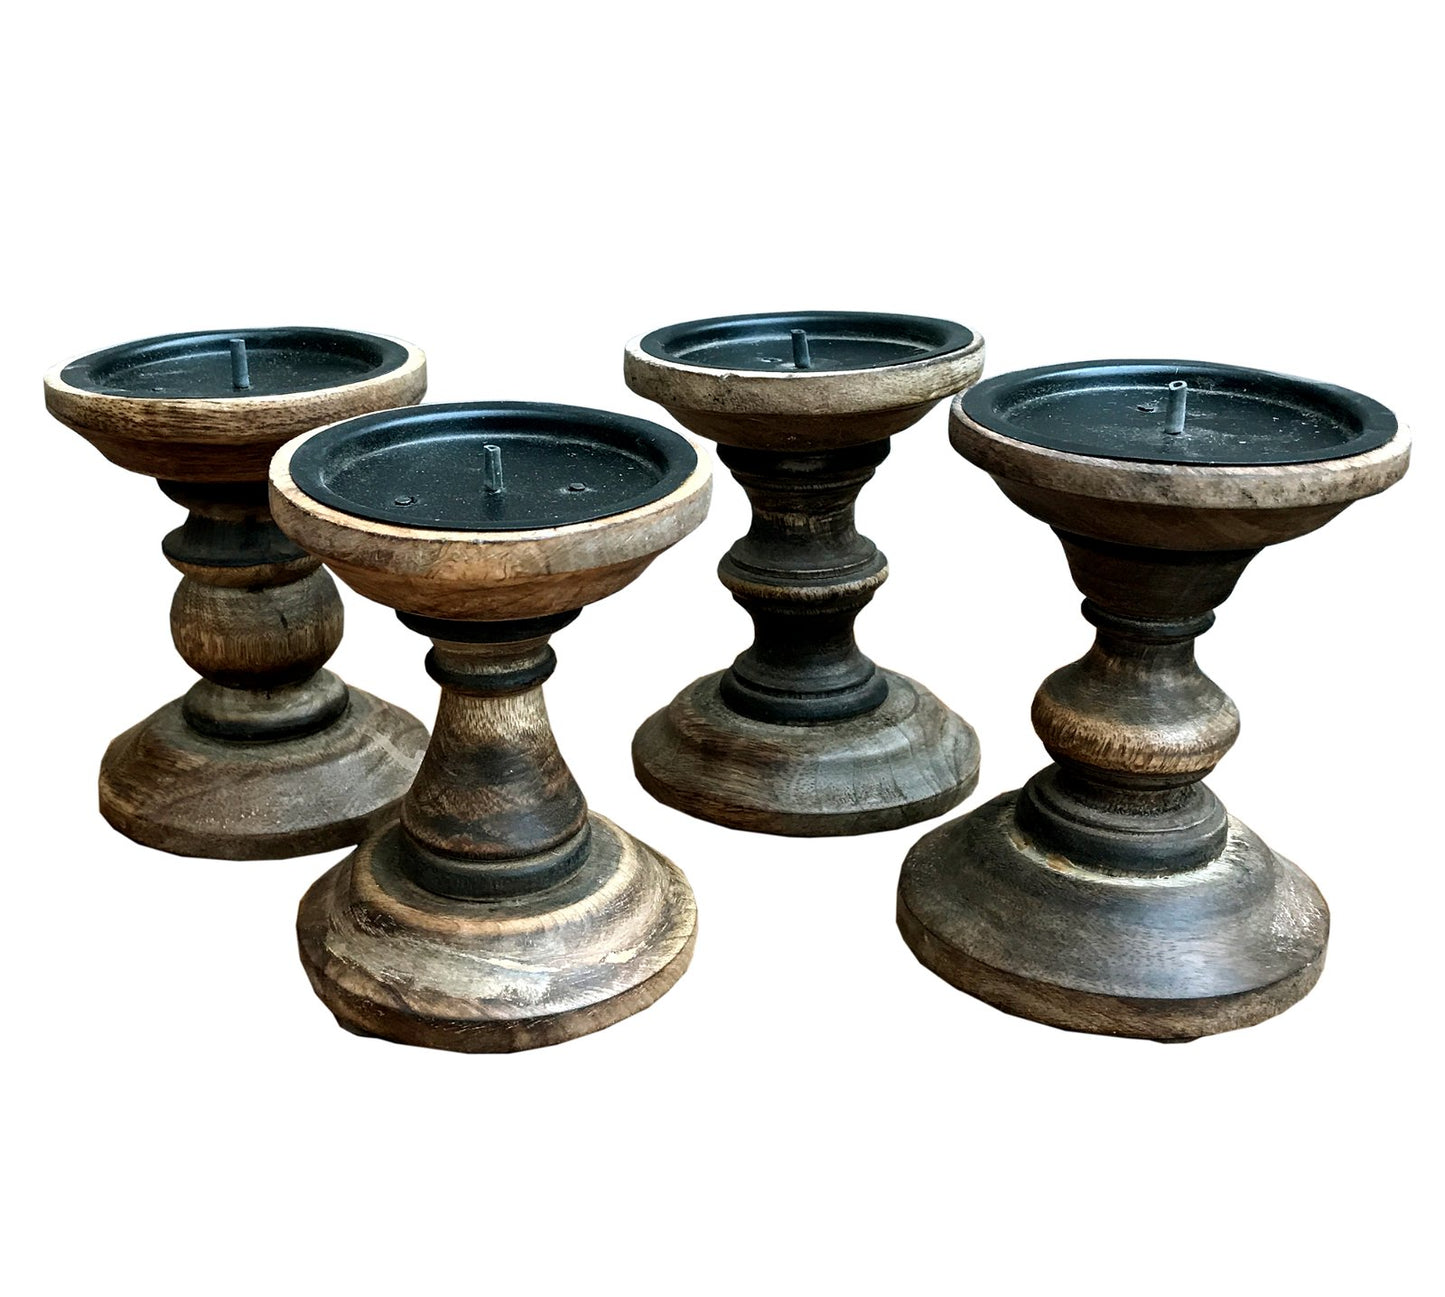 Set of 4 Brown Wooden Candlestick Church Pillar Candle Holders